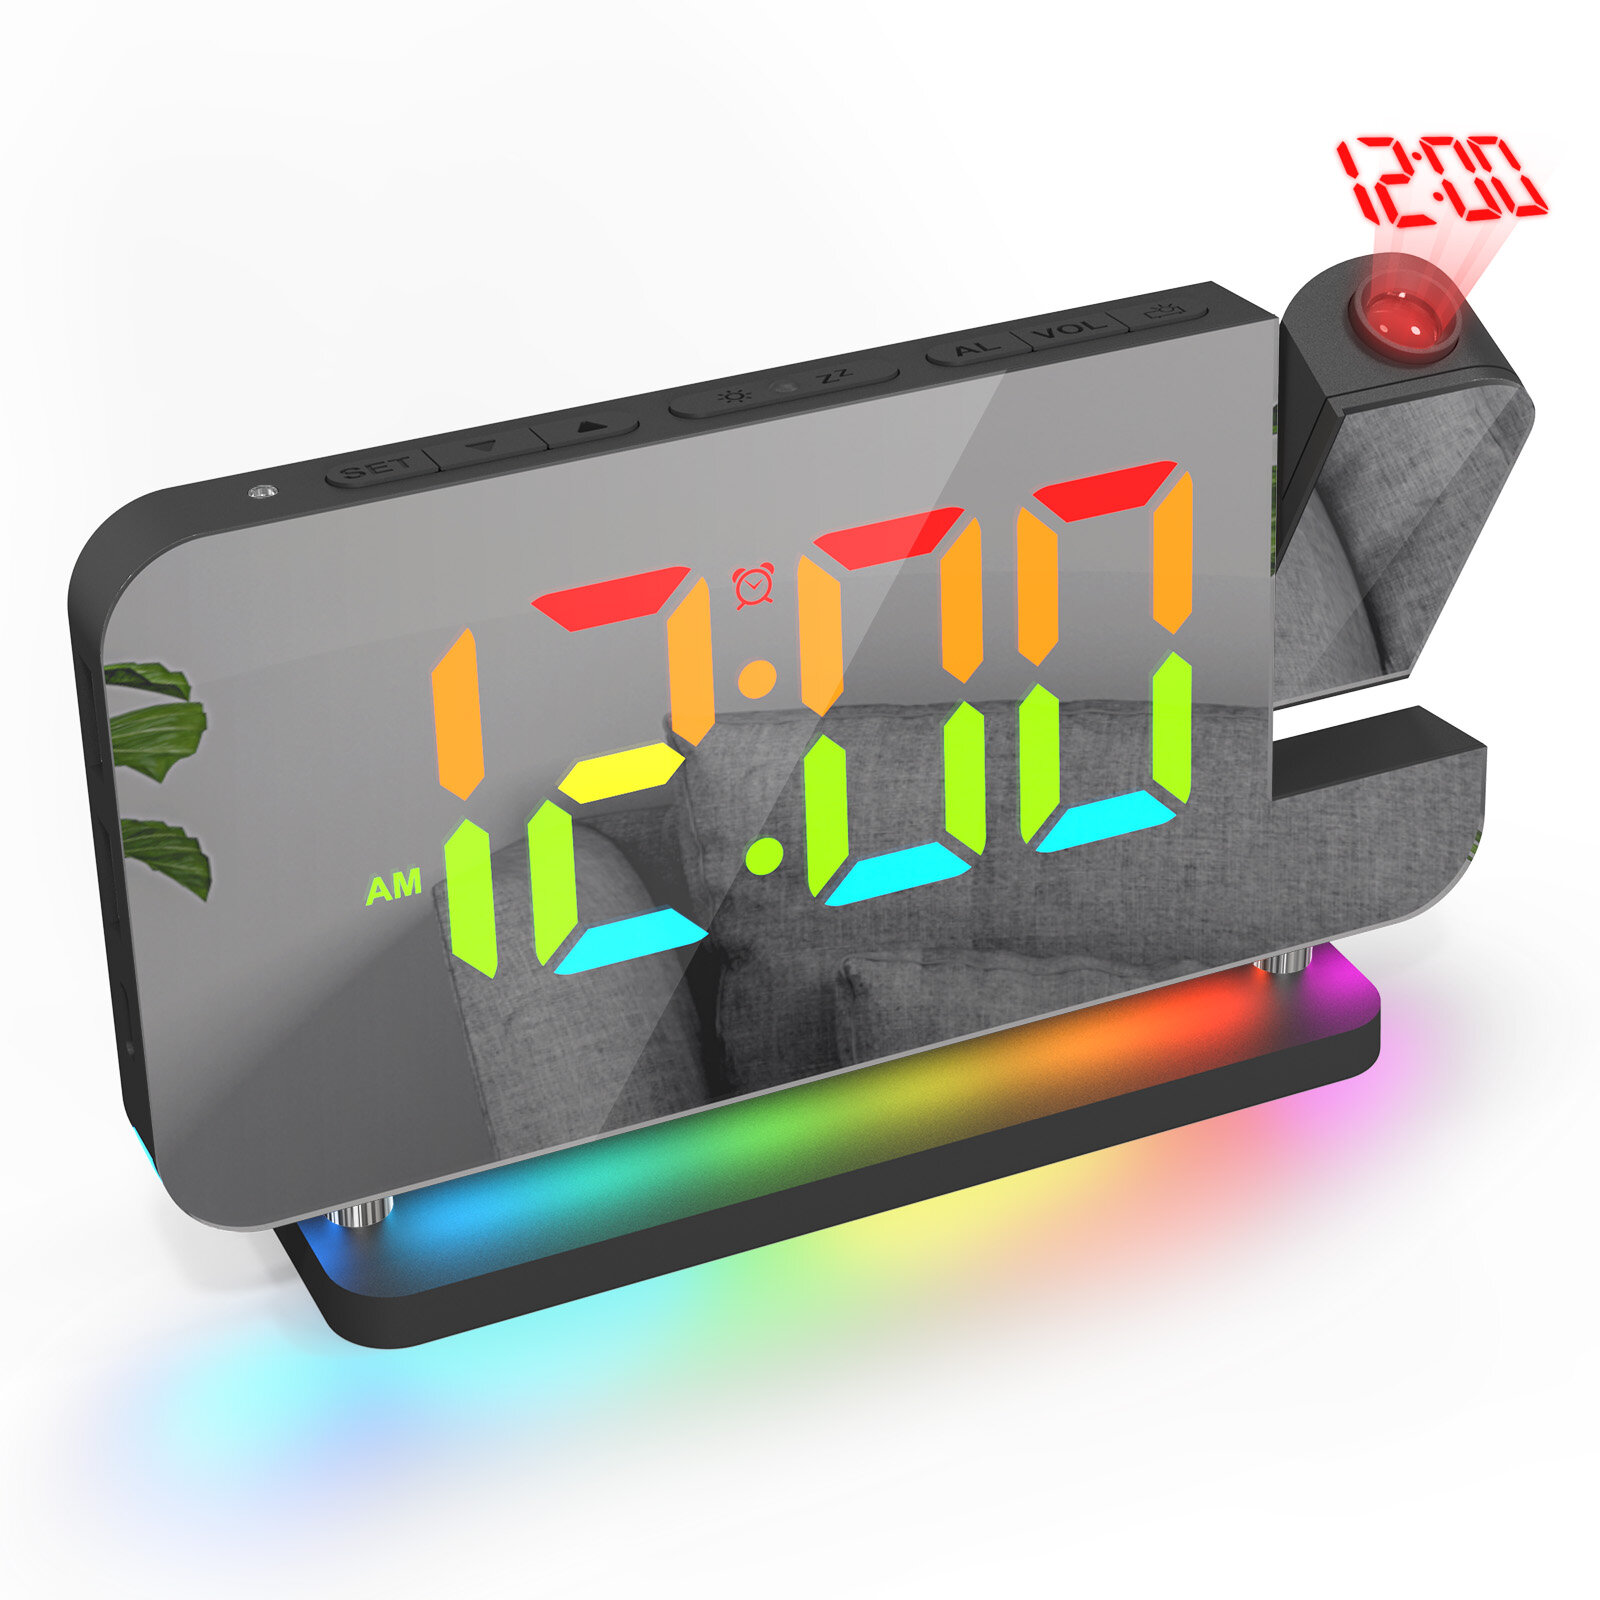 AGSIVO LED RGB Projection Digital Alarm Clock Coupon Price (18.99 USD)